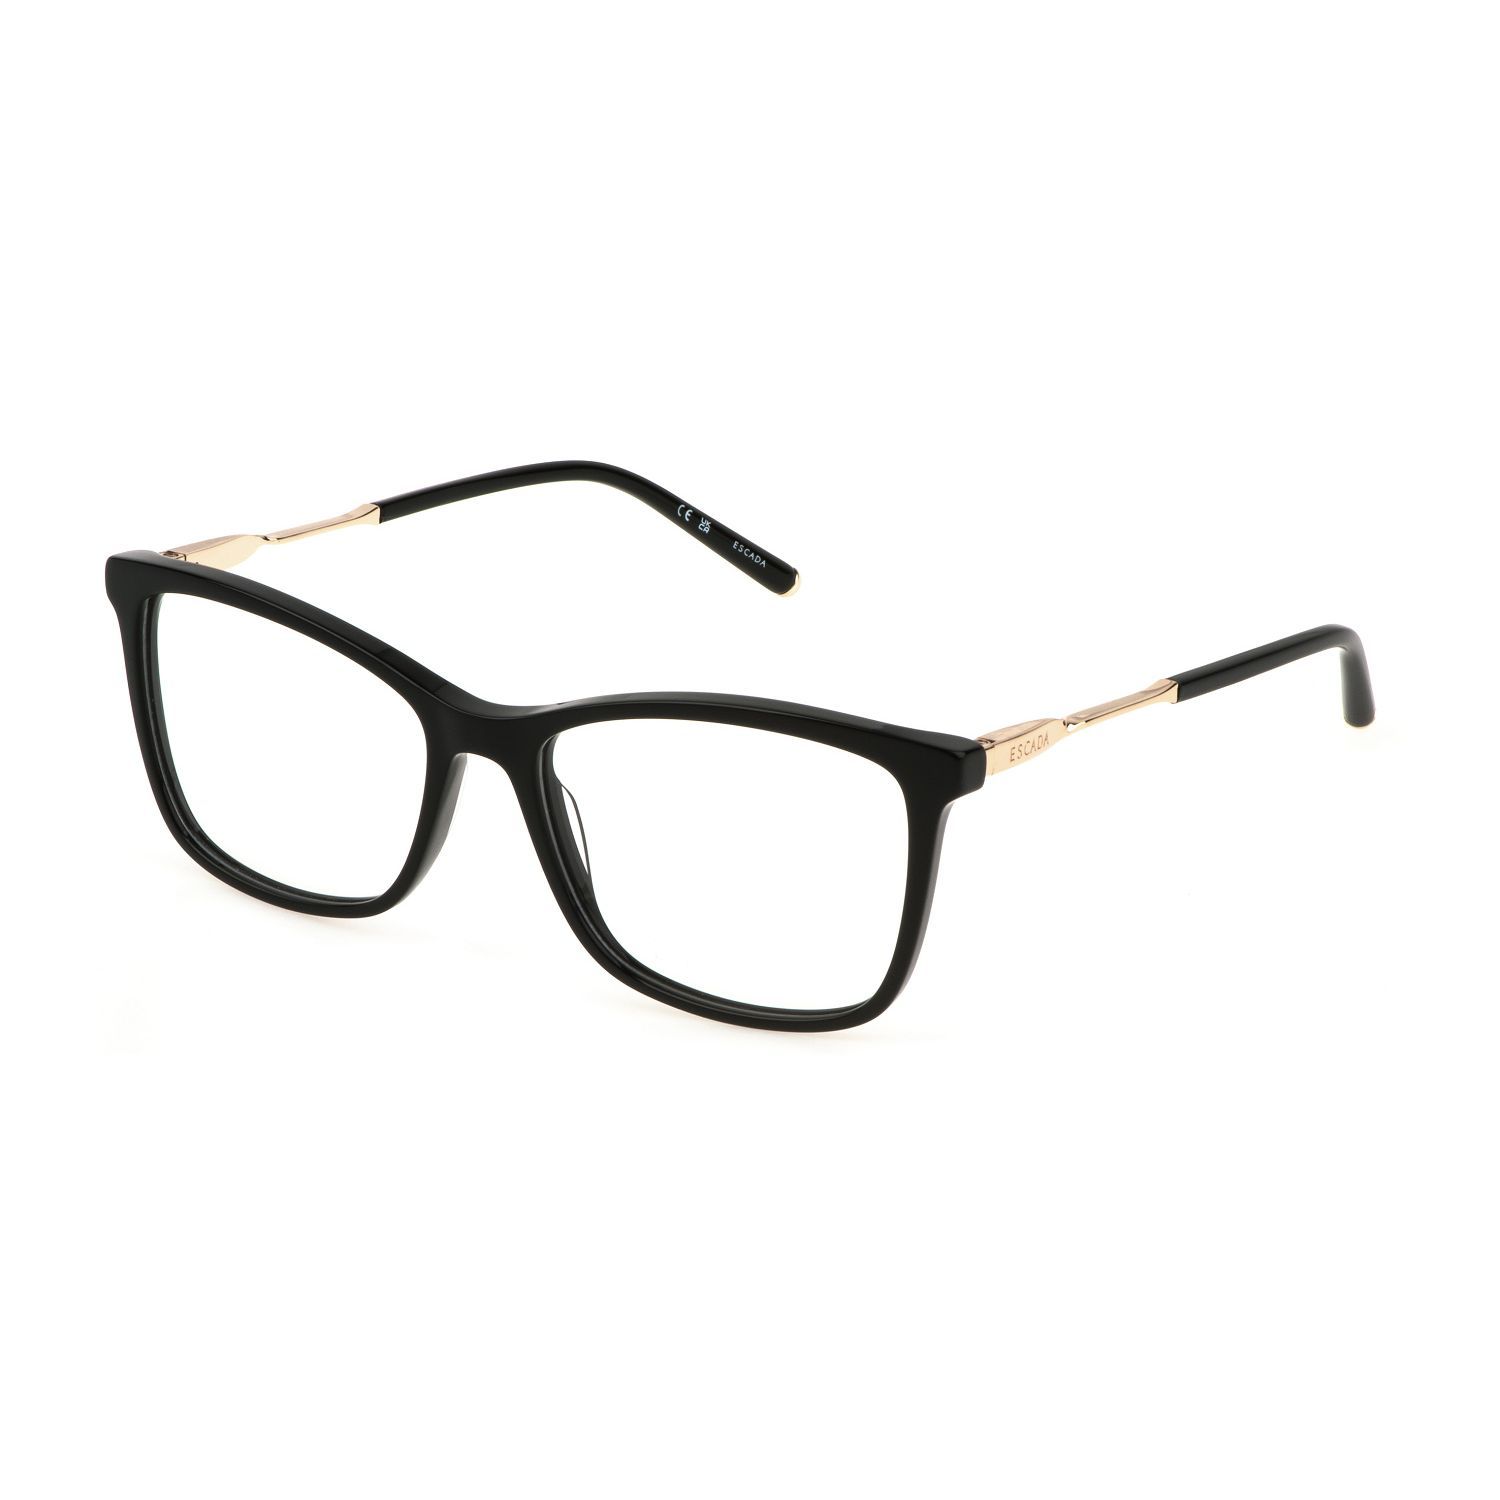 VESE08 Square Eyeglasses 0700 - size 54